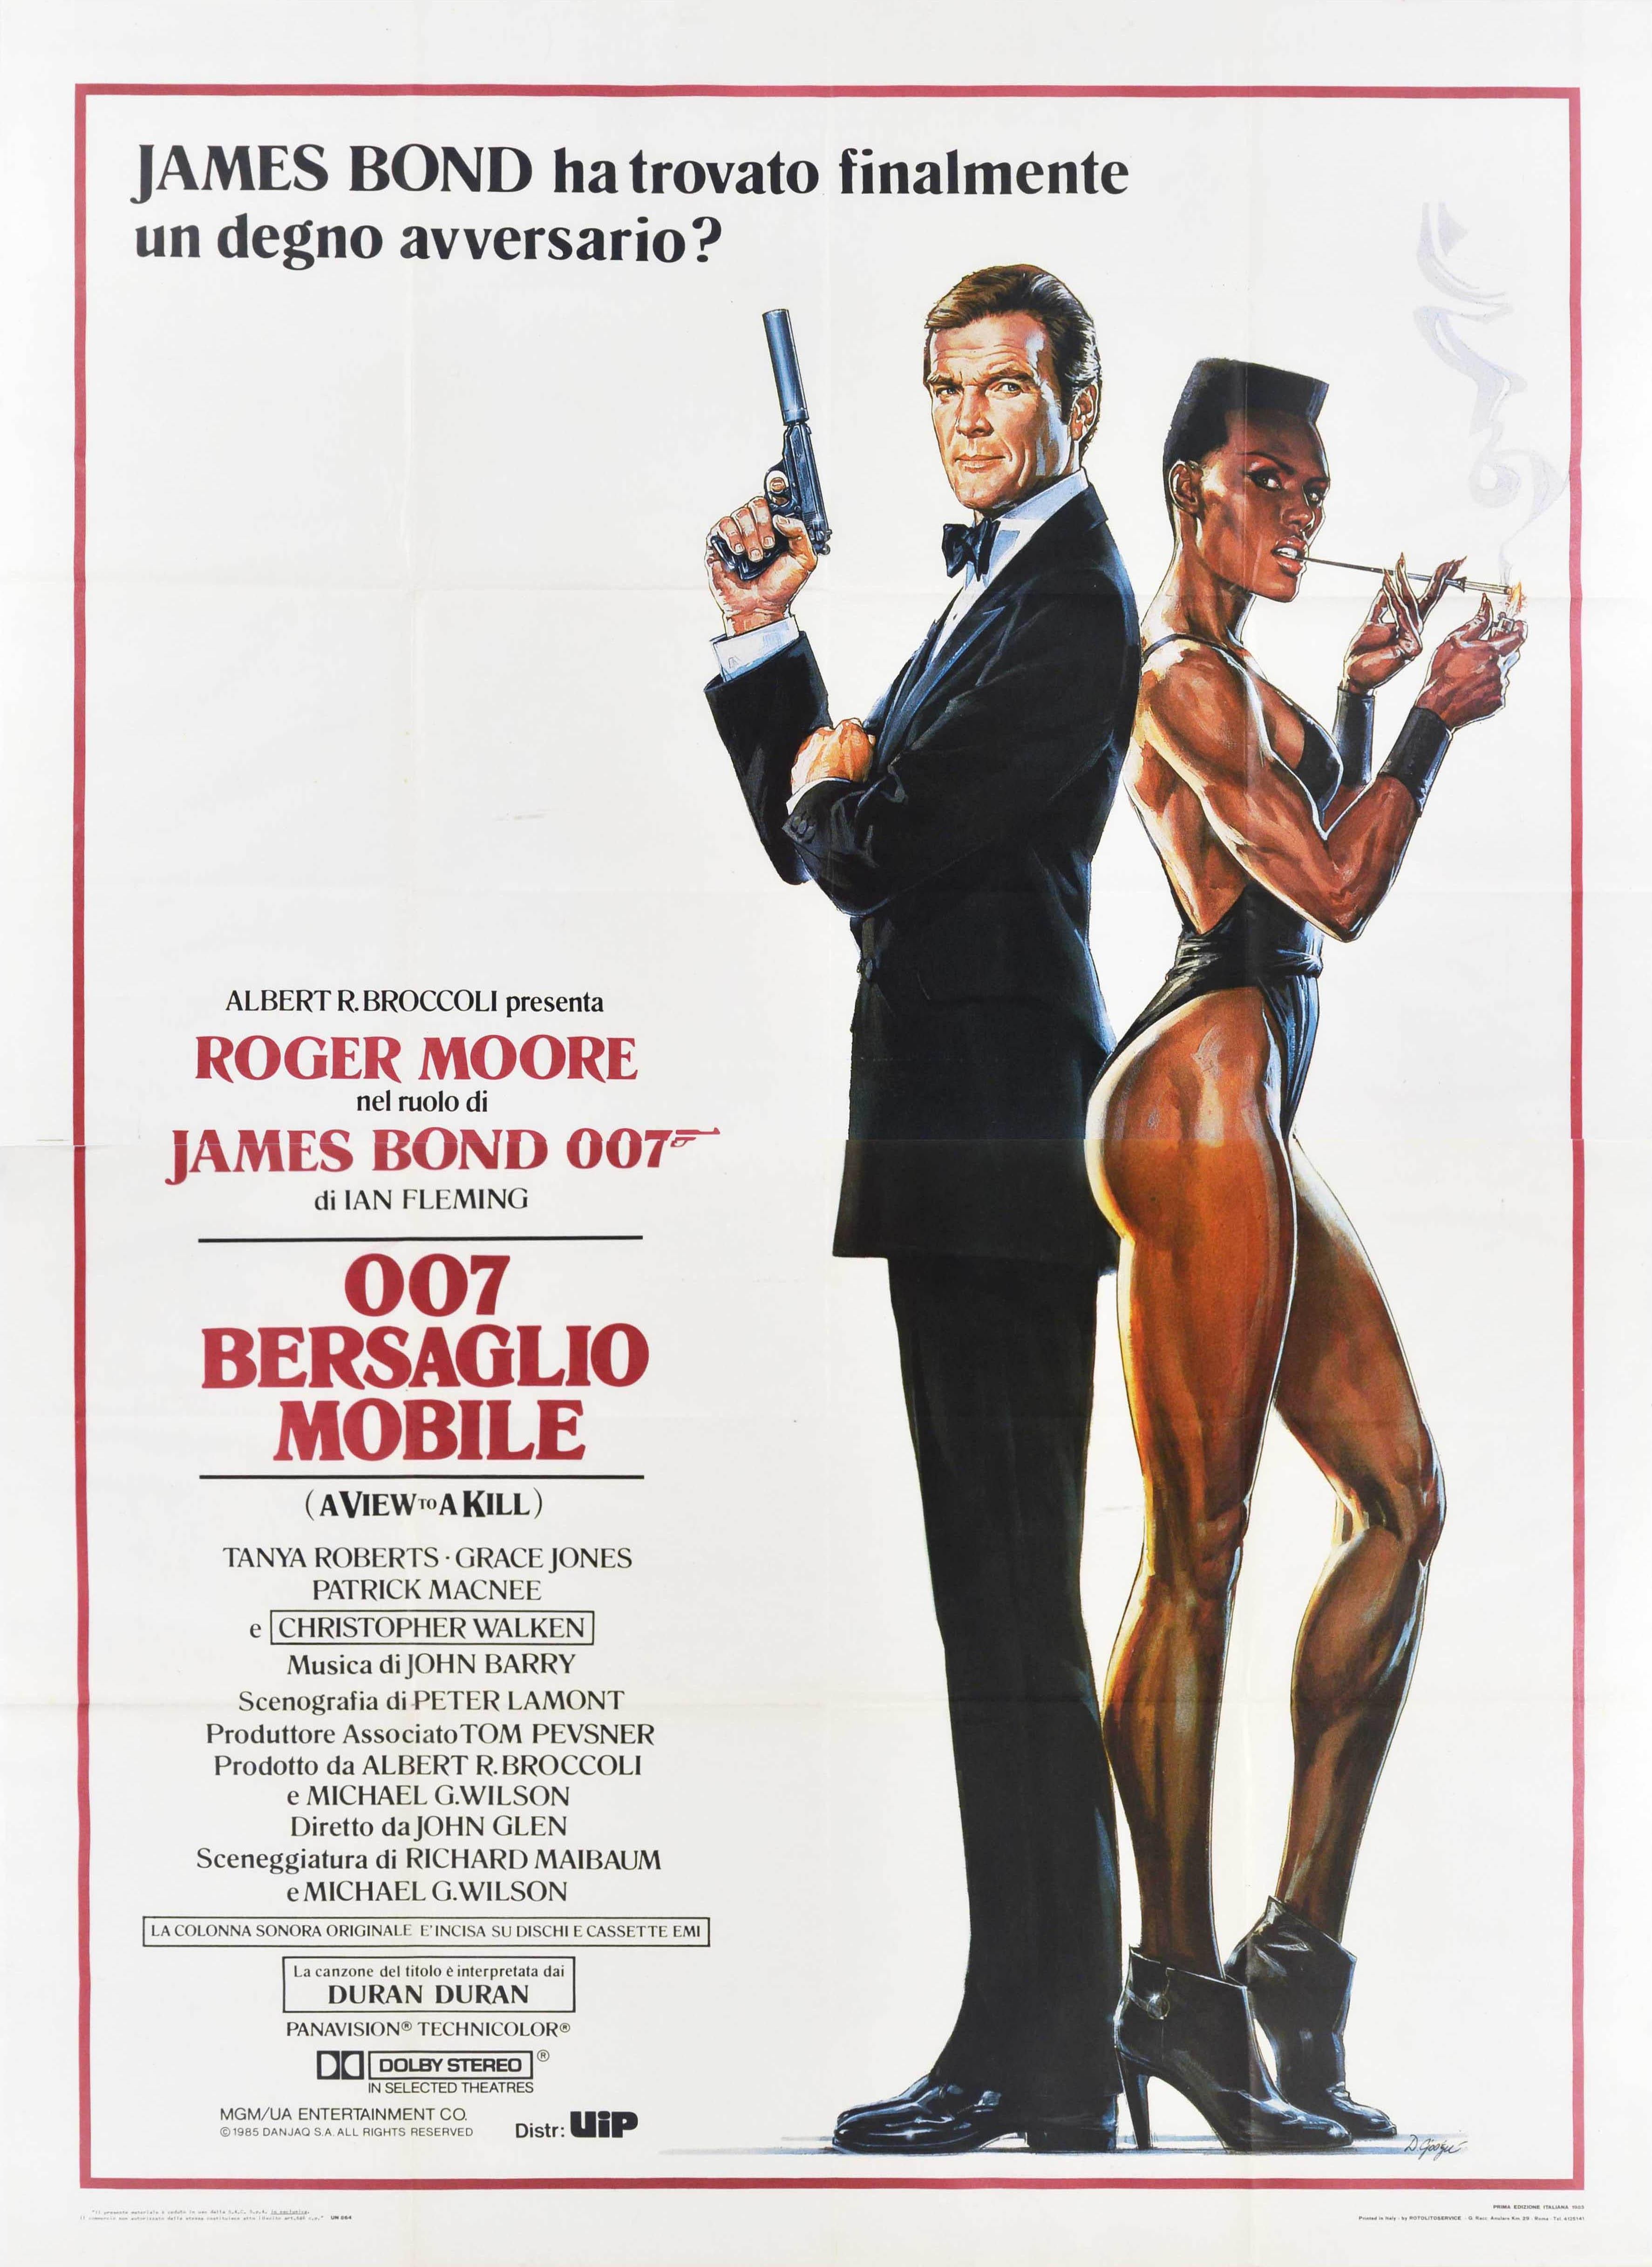 Dan Goozee Print - Original Vintage James Bond Film Poster A View To A Kill 007 Bersaglio Mobile